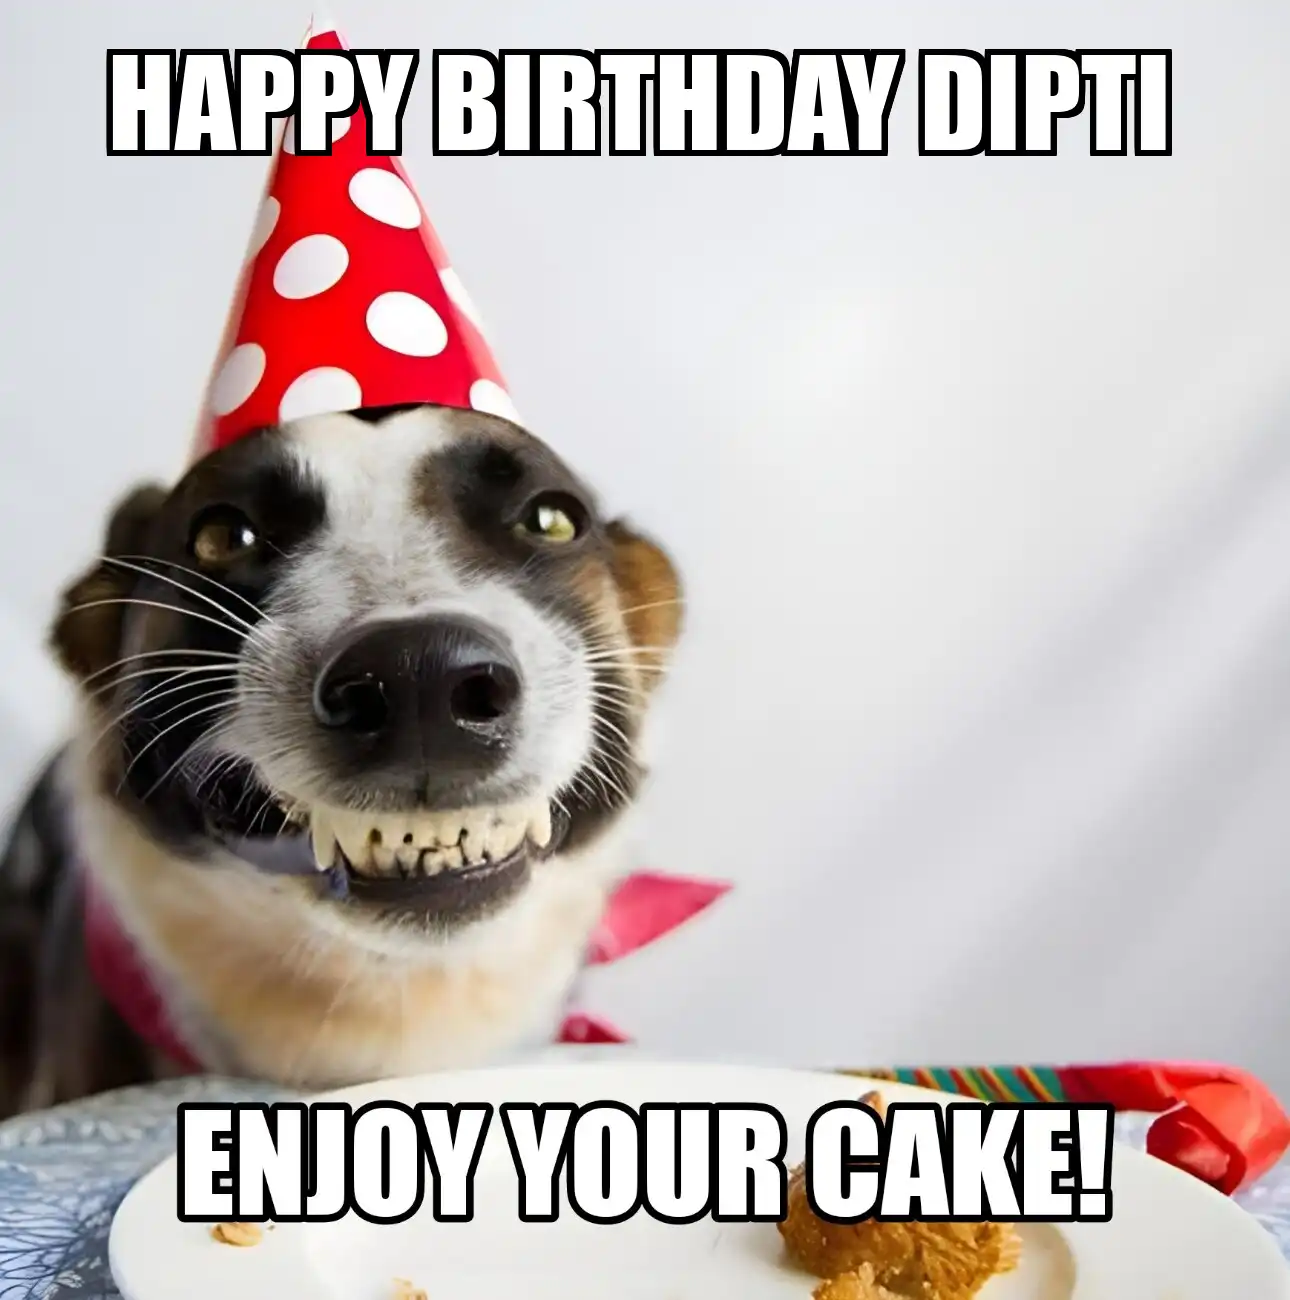 Happy Birthday Dipti Enjoy Your Cake Dog Meme